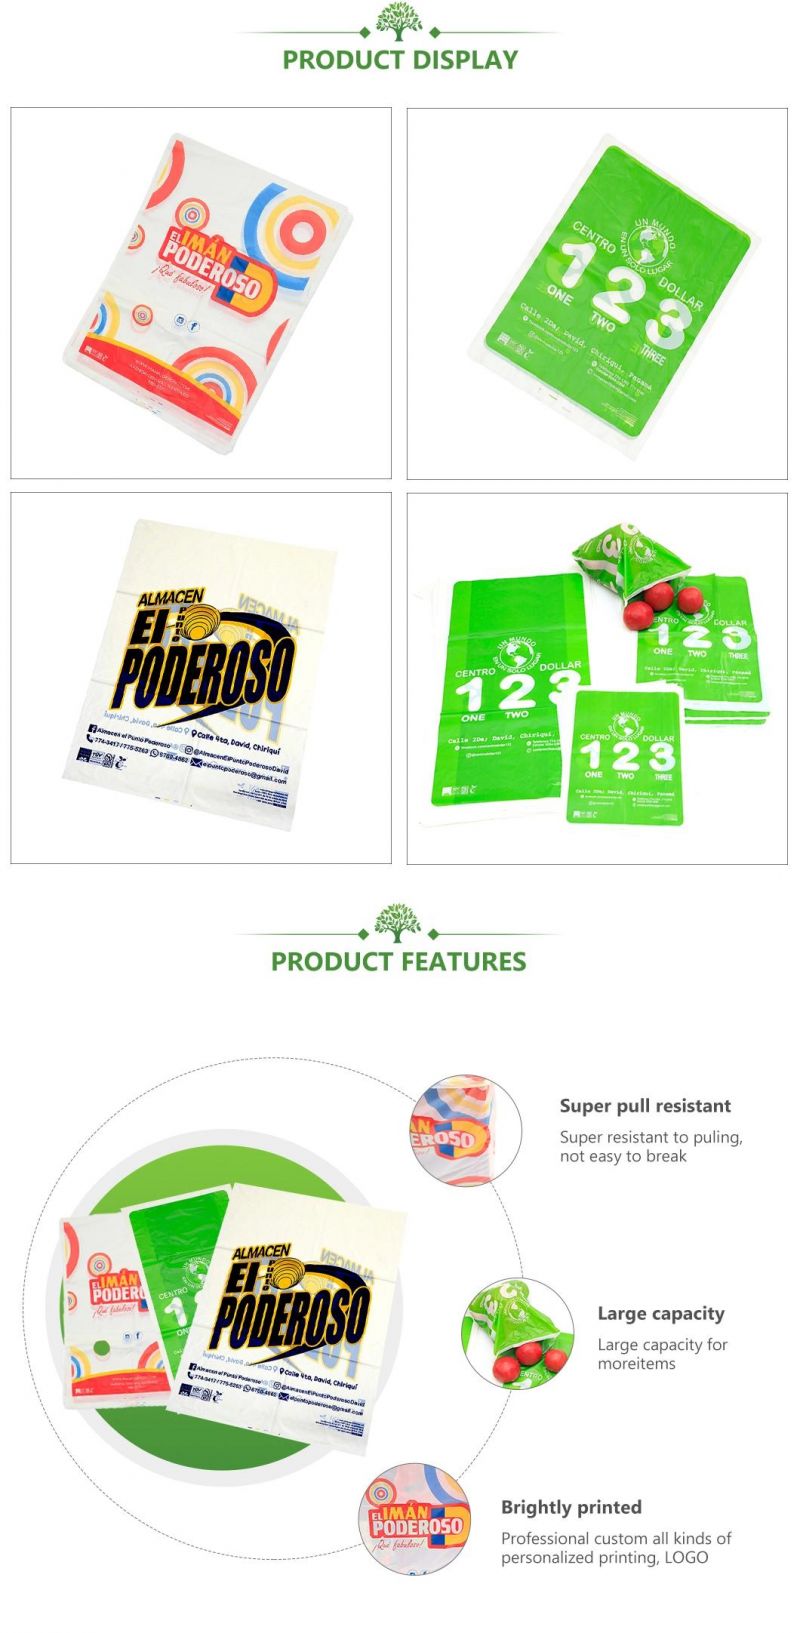 PLA+Pbat/Pbat+Corn Starch Biodegradable Bags, Compostable Bags, Vegetable Bags for Supermarket